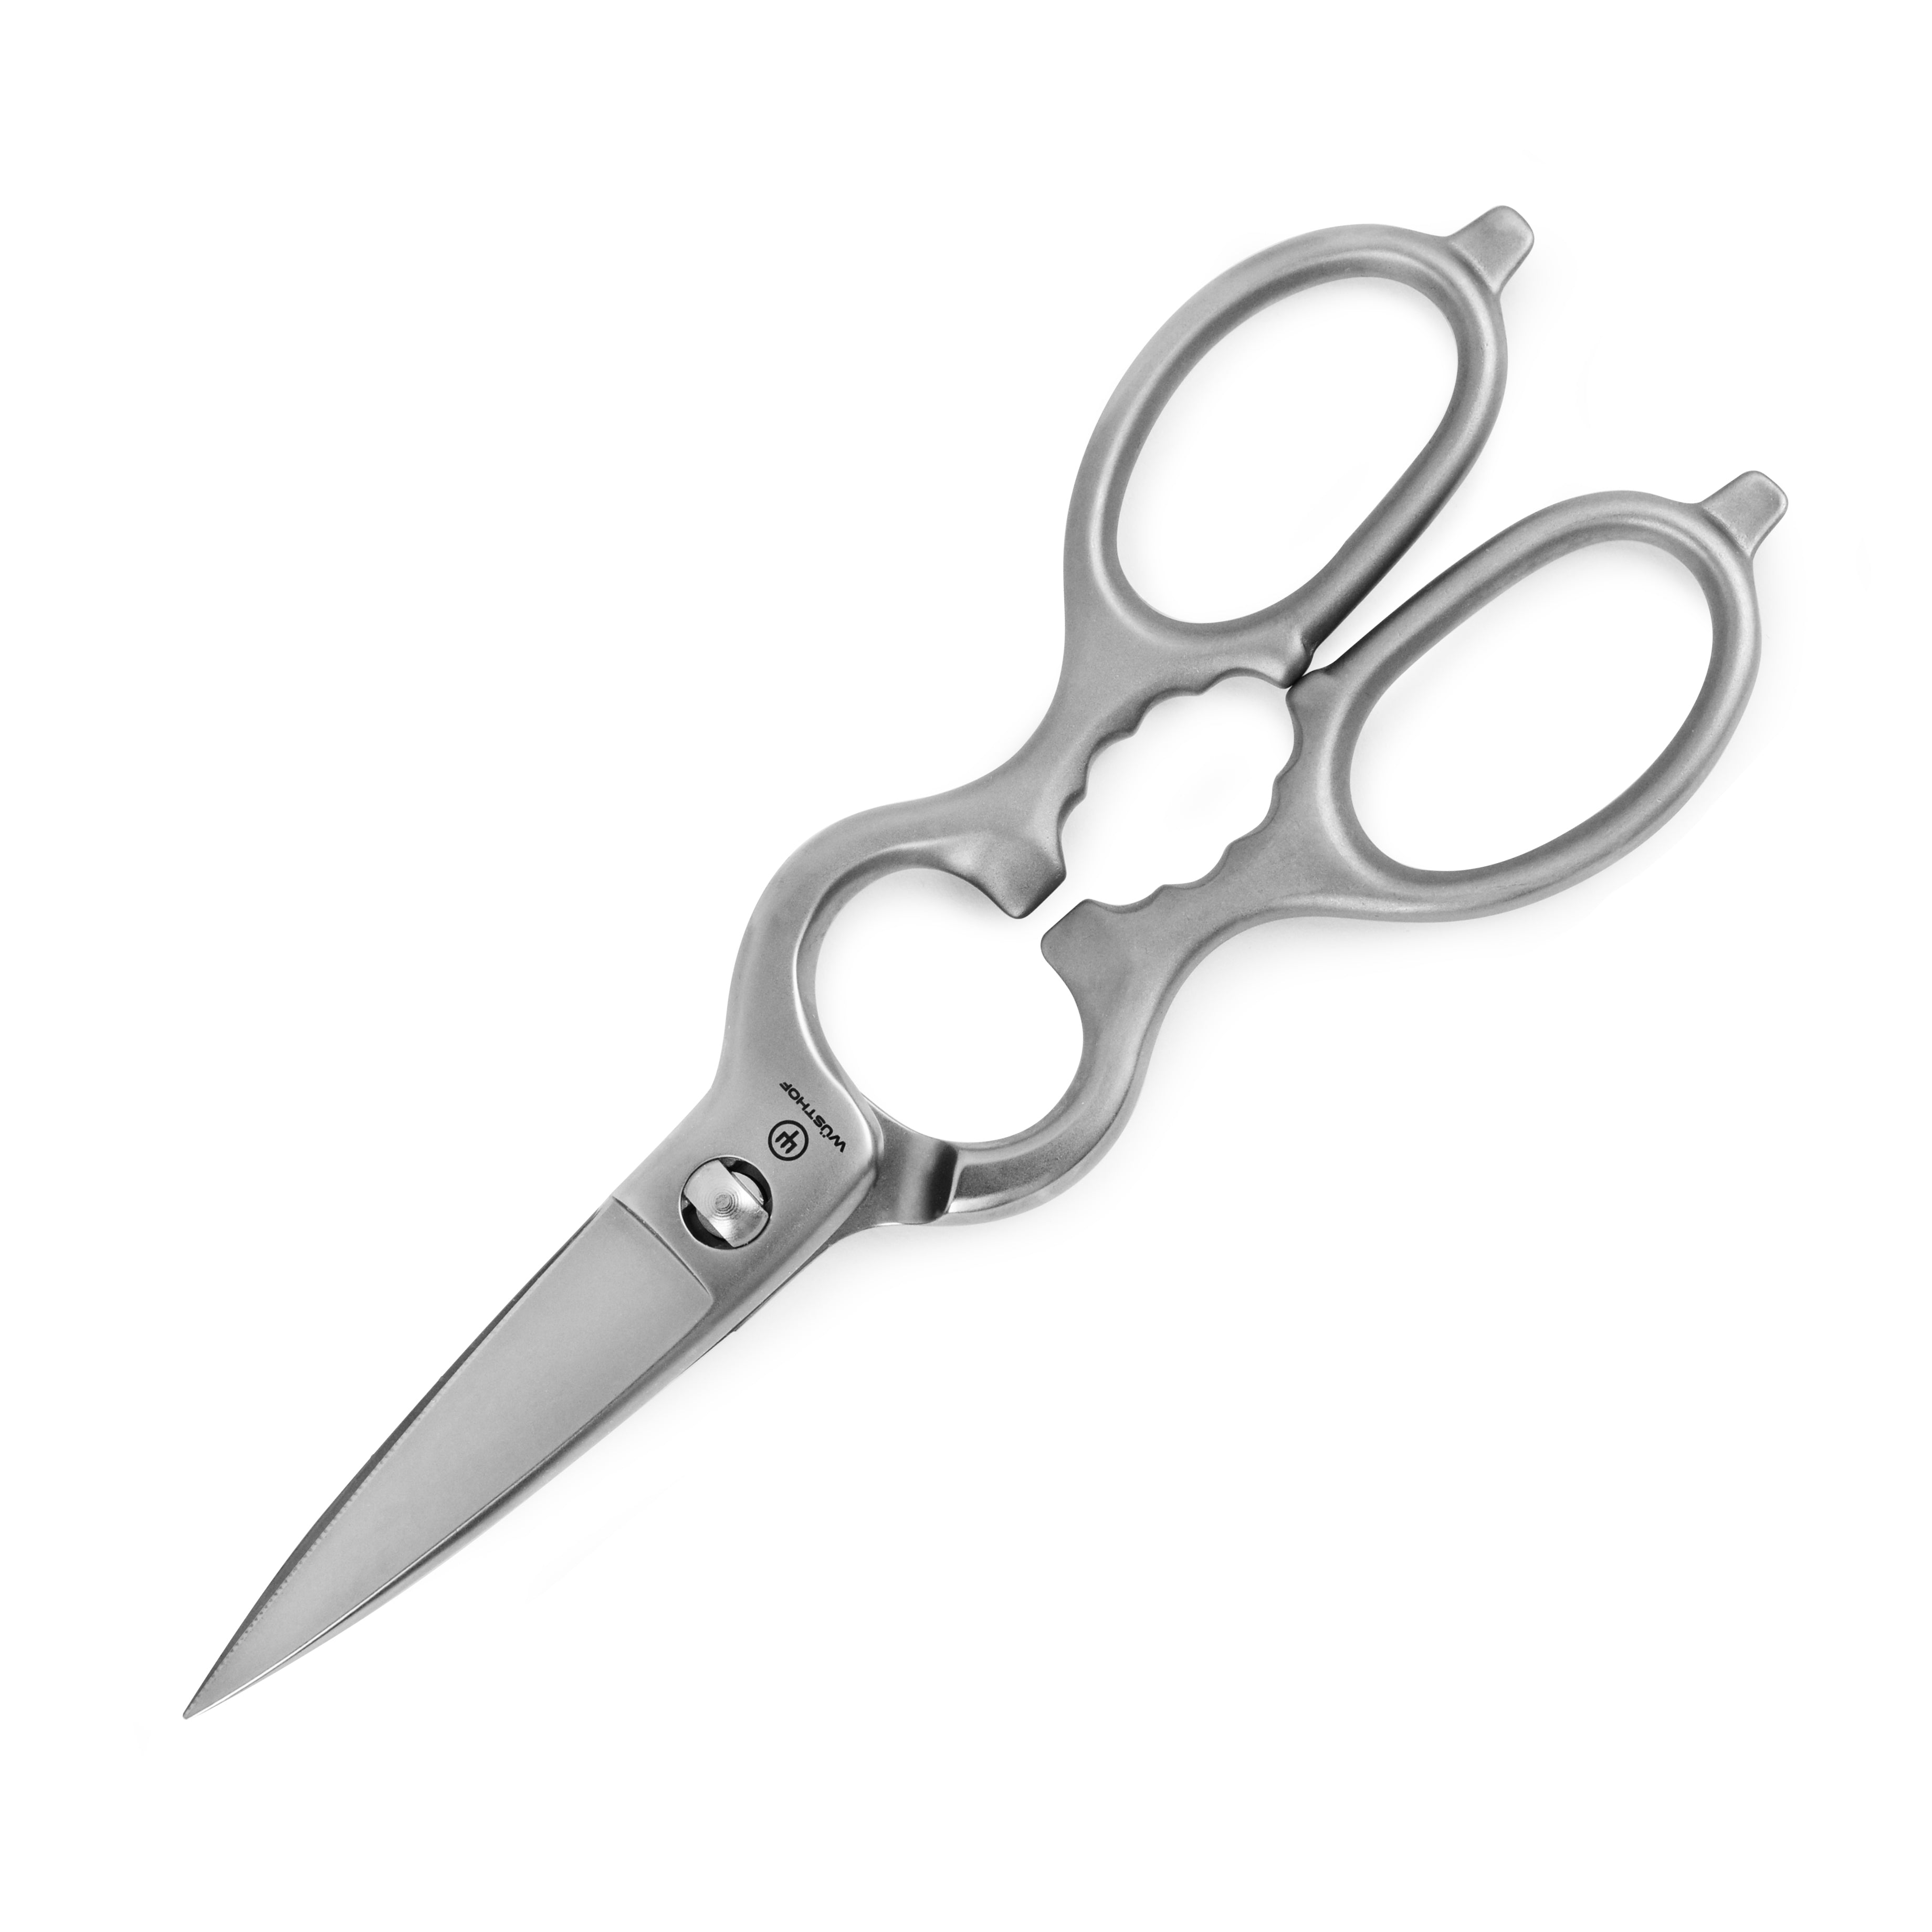 Stainless Steel Kitchen Scissors 